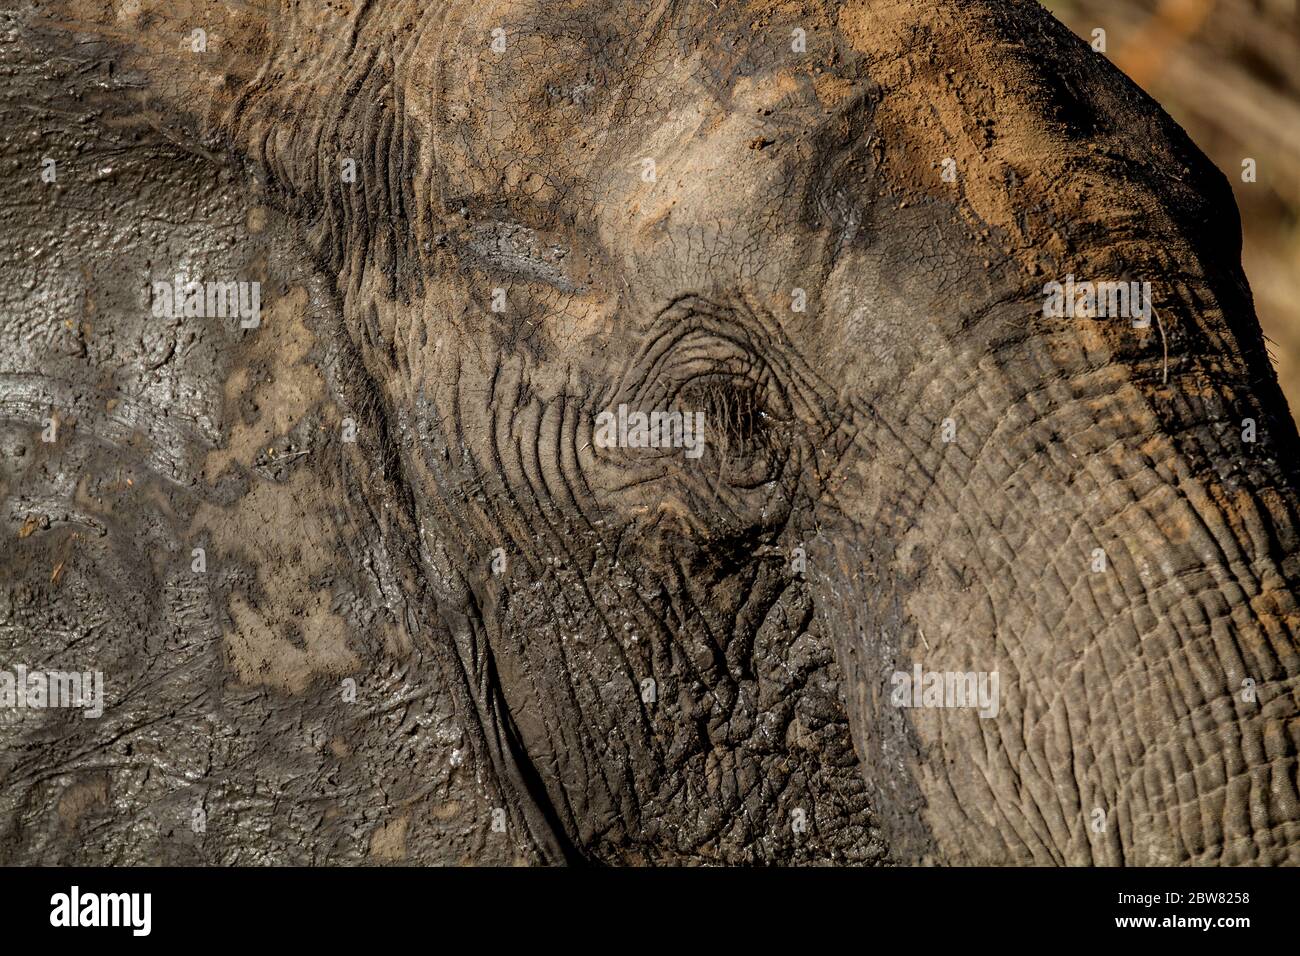 Elefanten in freier Wildbahn Stockfoto